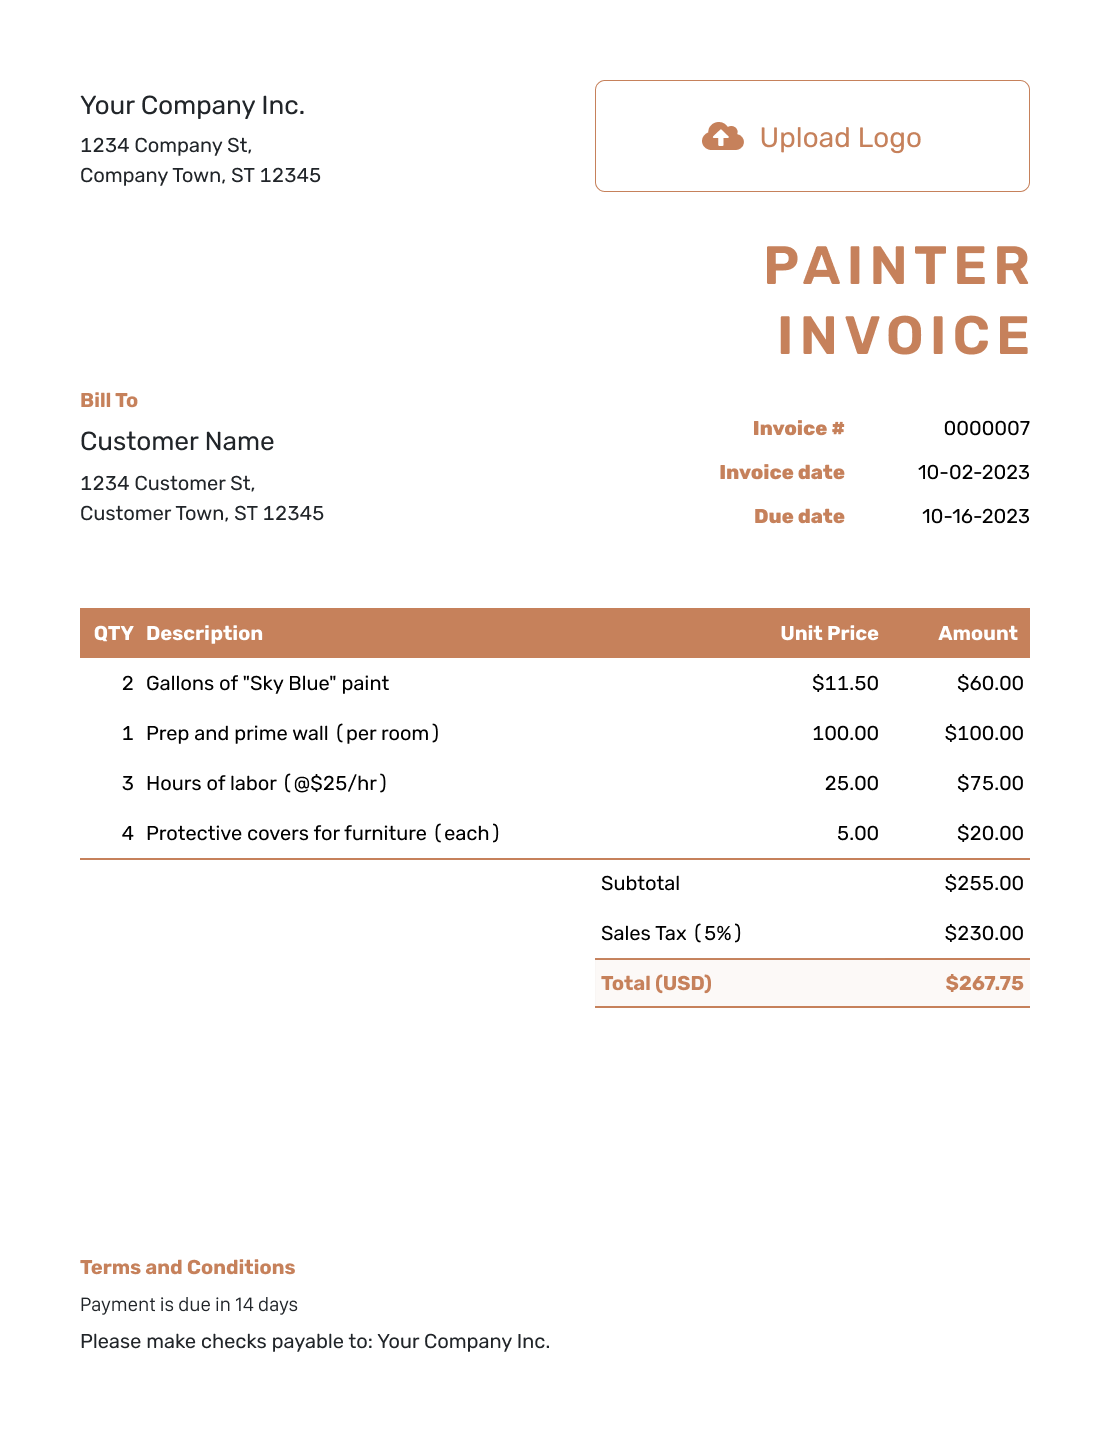 Standard Painter Invoice Template